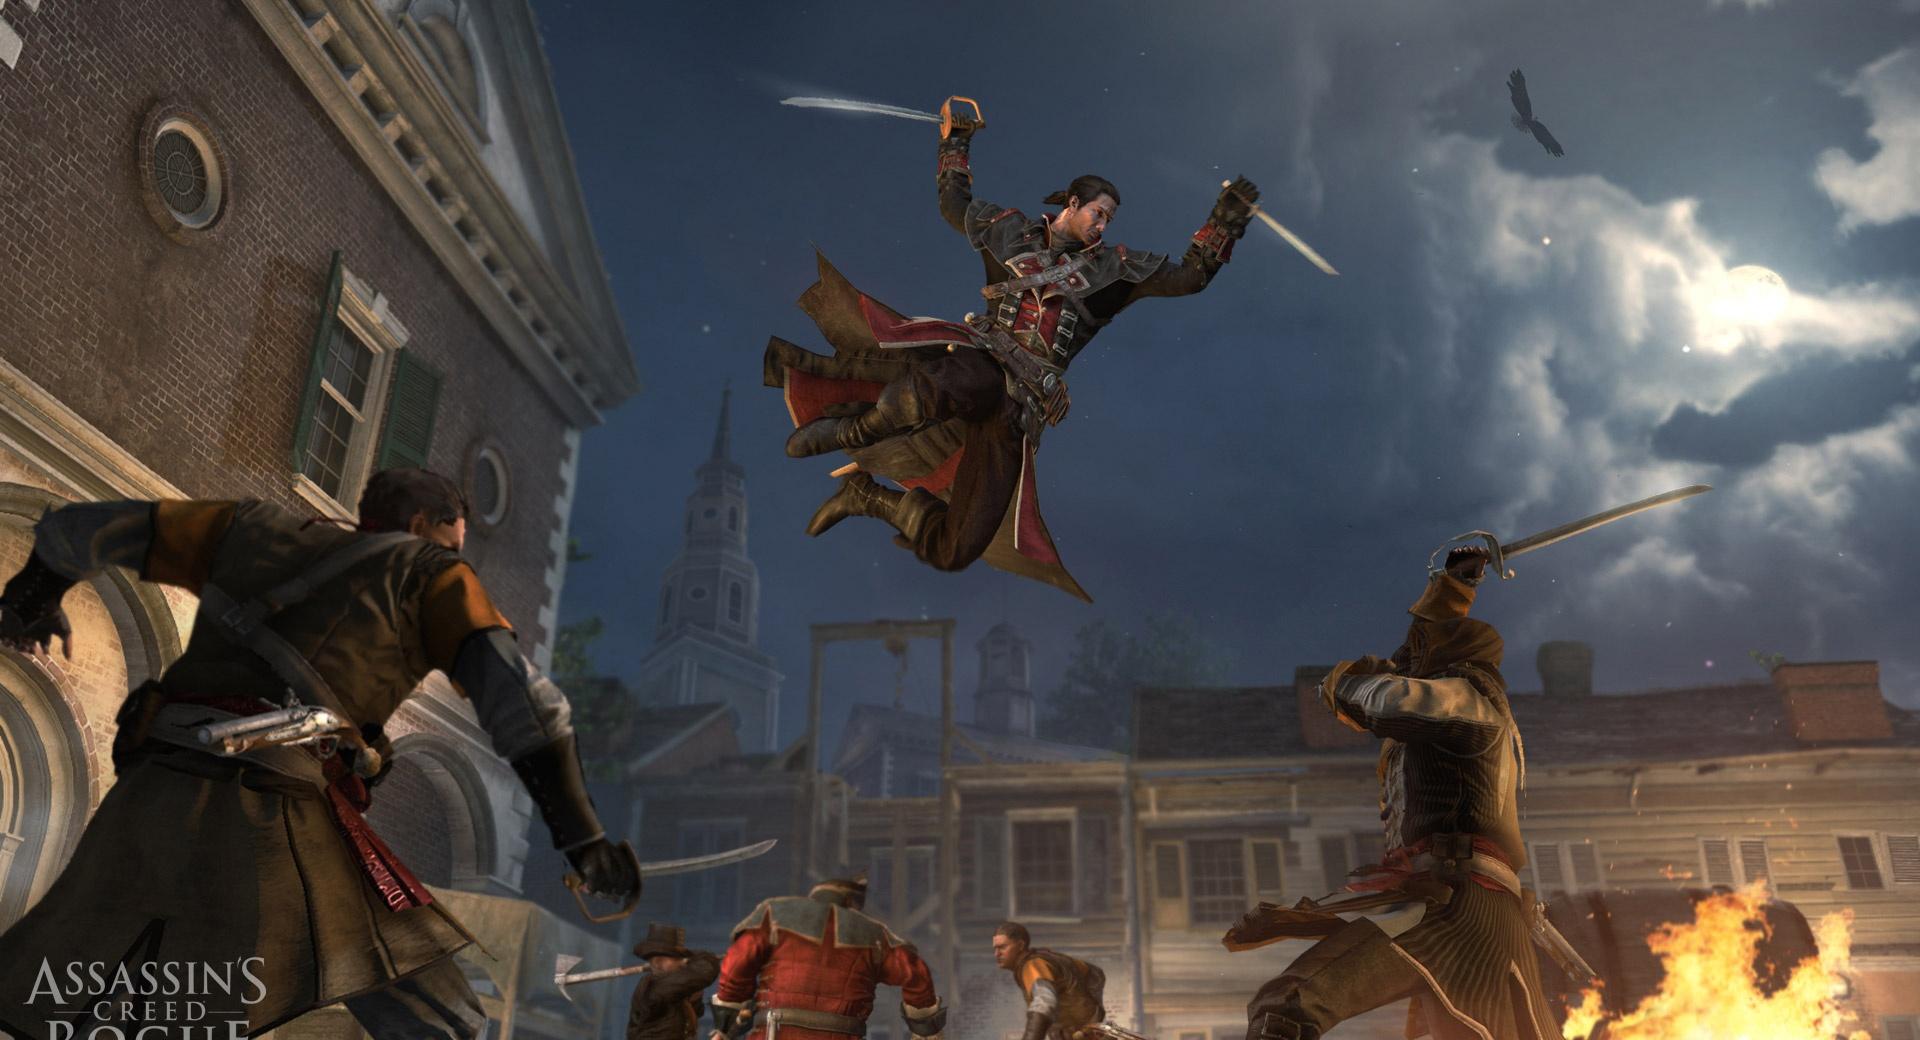 Assassins Creed Rogue Jump to Kill at 1280 x 960 size wallpapers HD quality